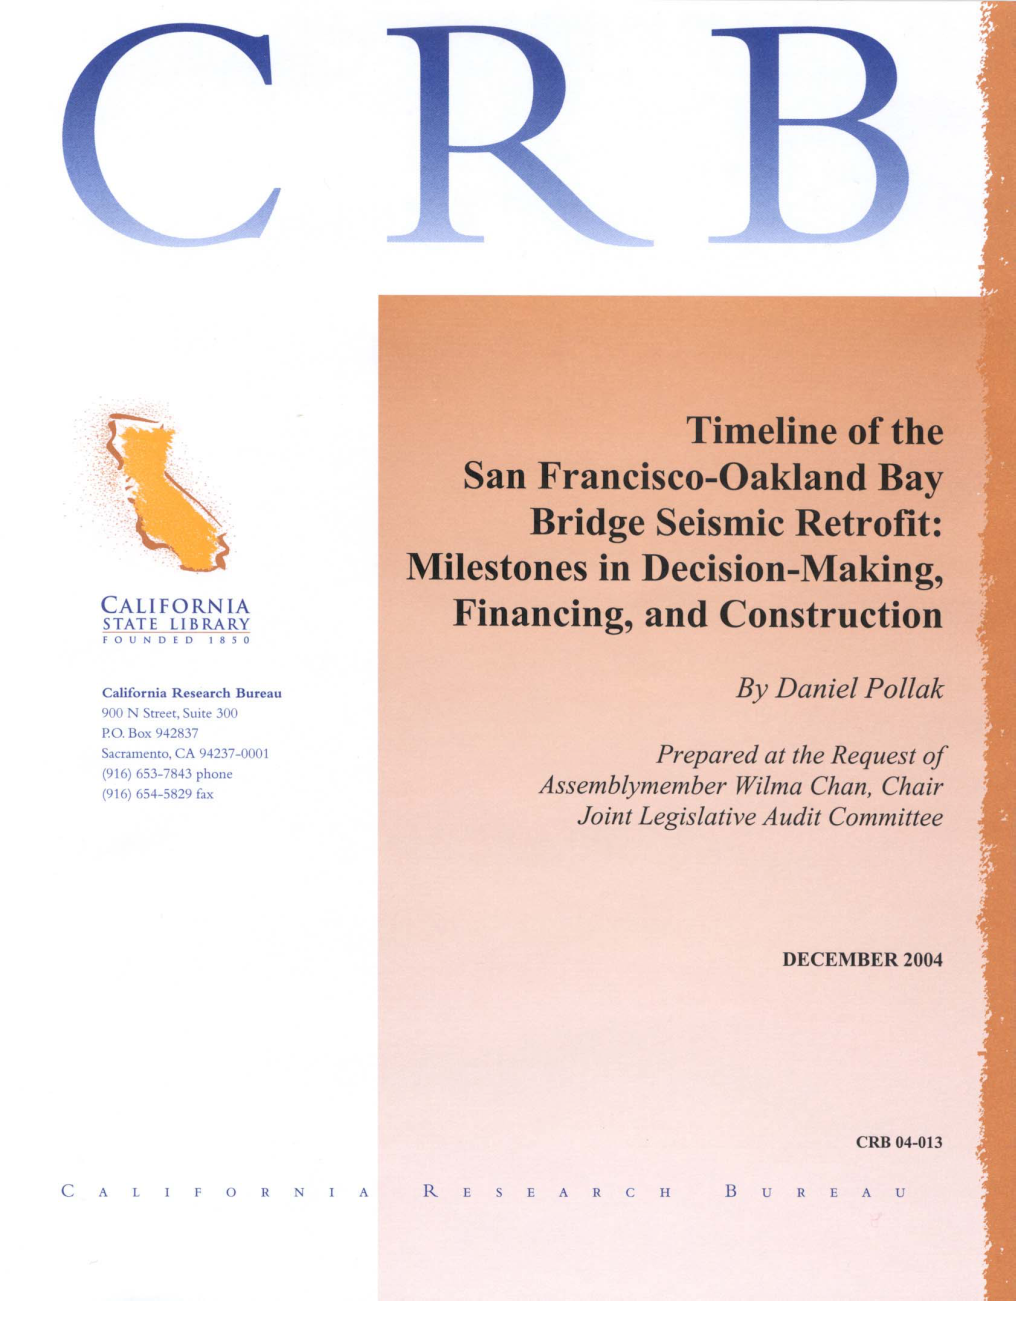 Timeline of the San Francisco-Oakland Bay Bridge Seismic Retrofit: Milestones in Decision-Making, Financing, and Construction